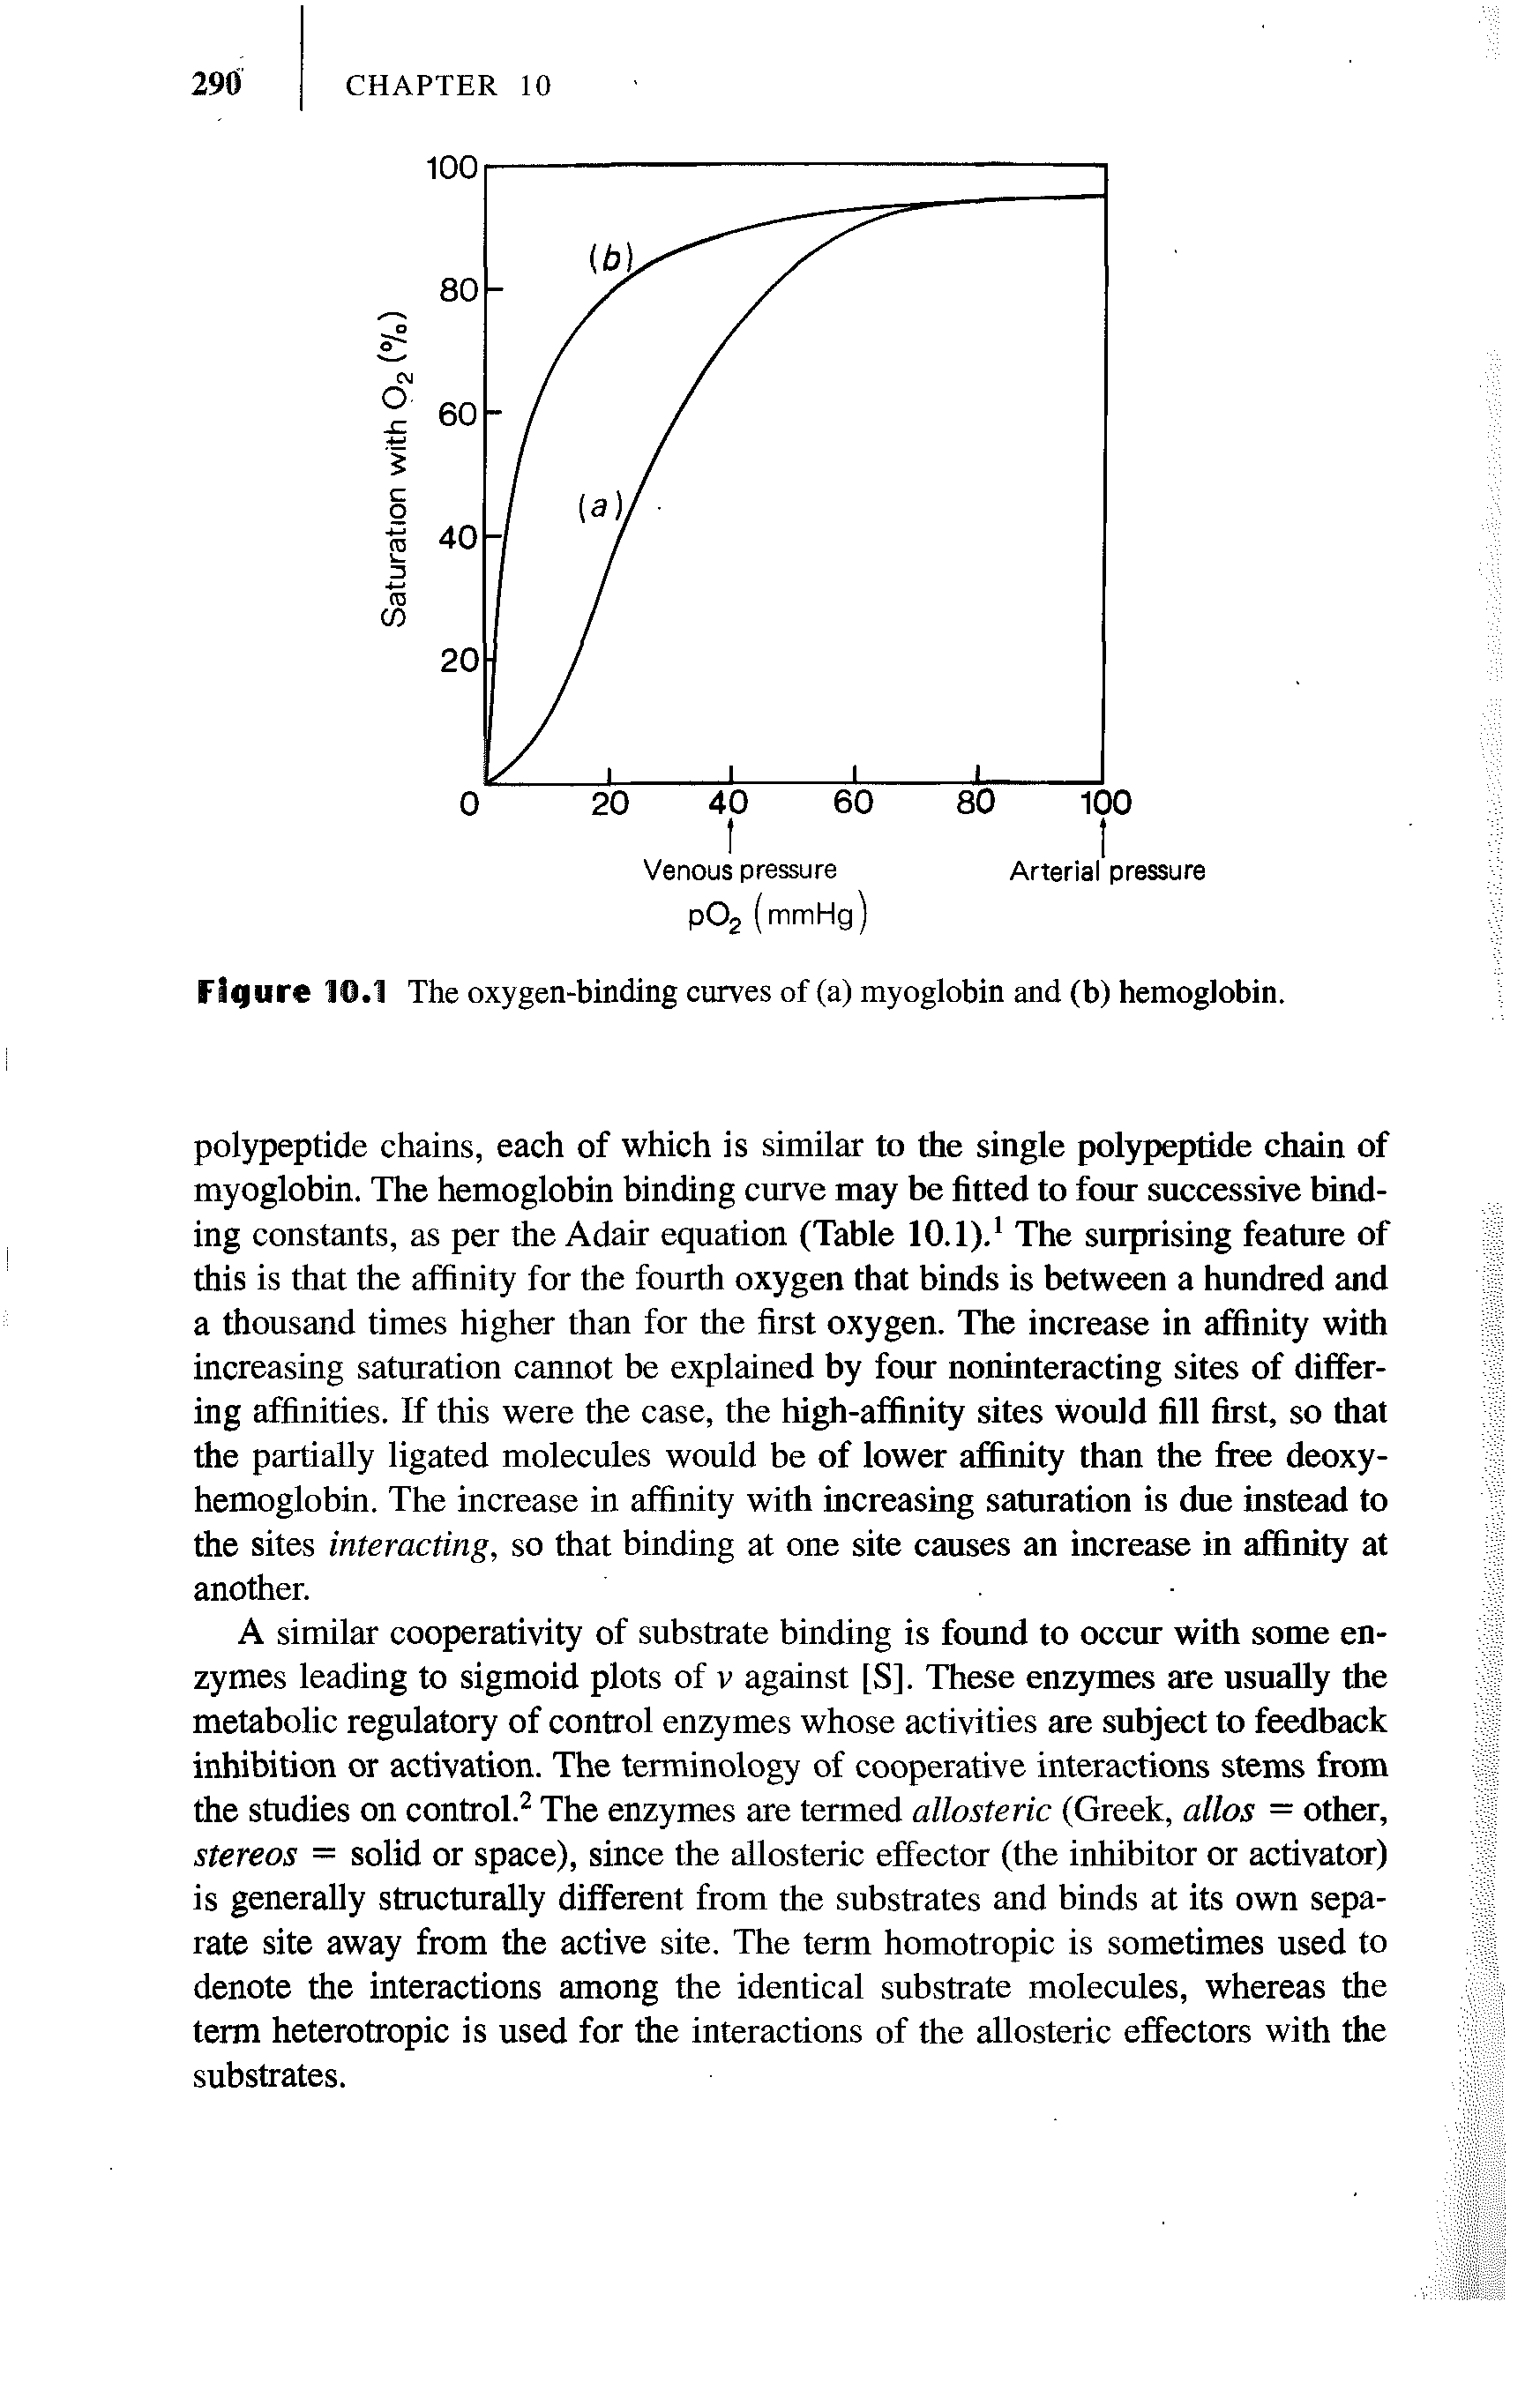 Figure 10.1 The oxygen-binding curves of (a) myoglobin and (b) hemoglobin.